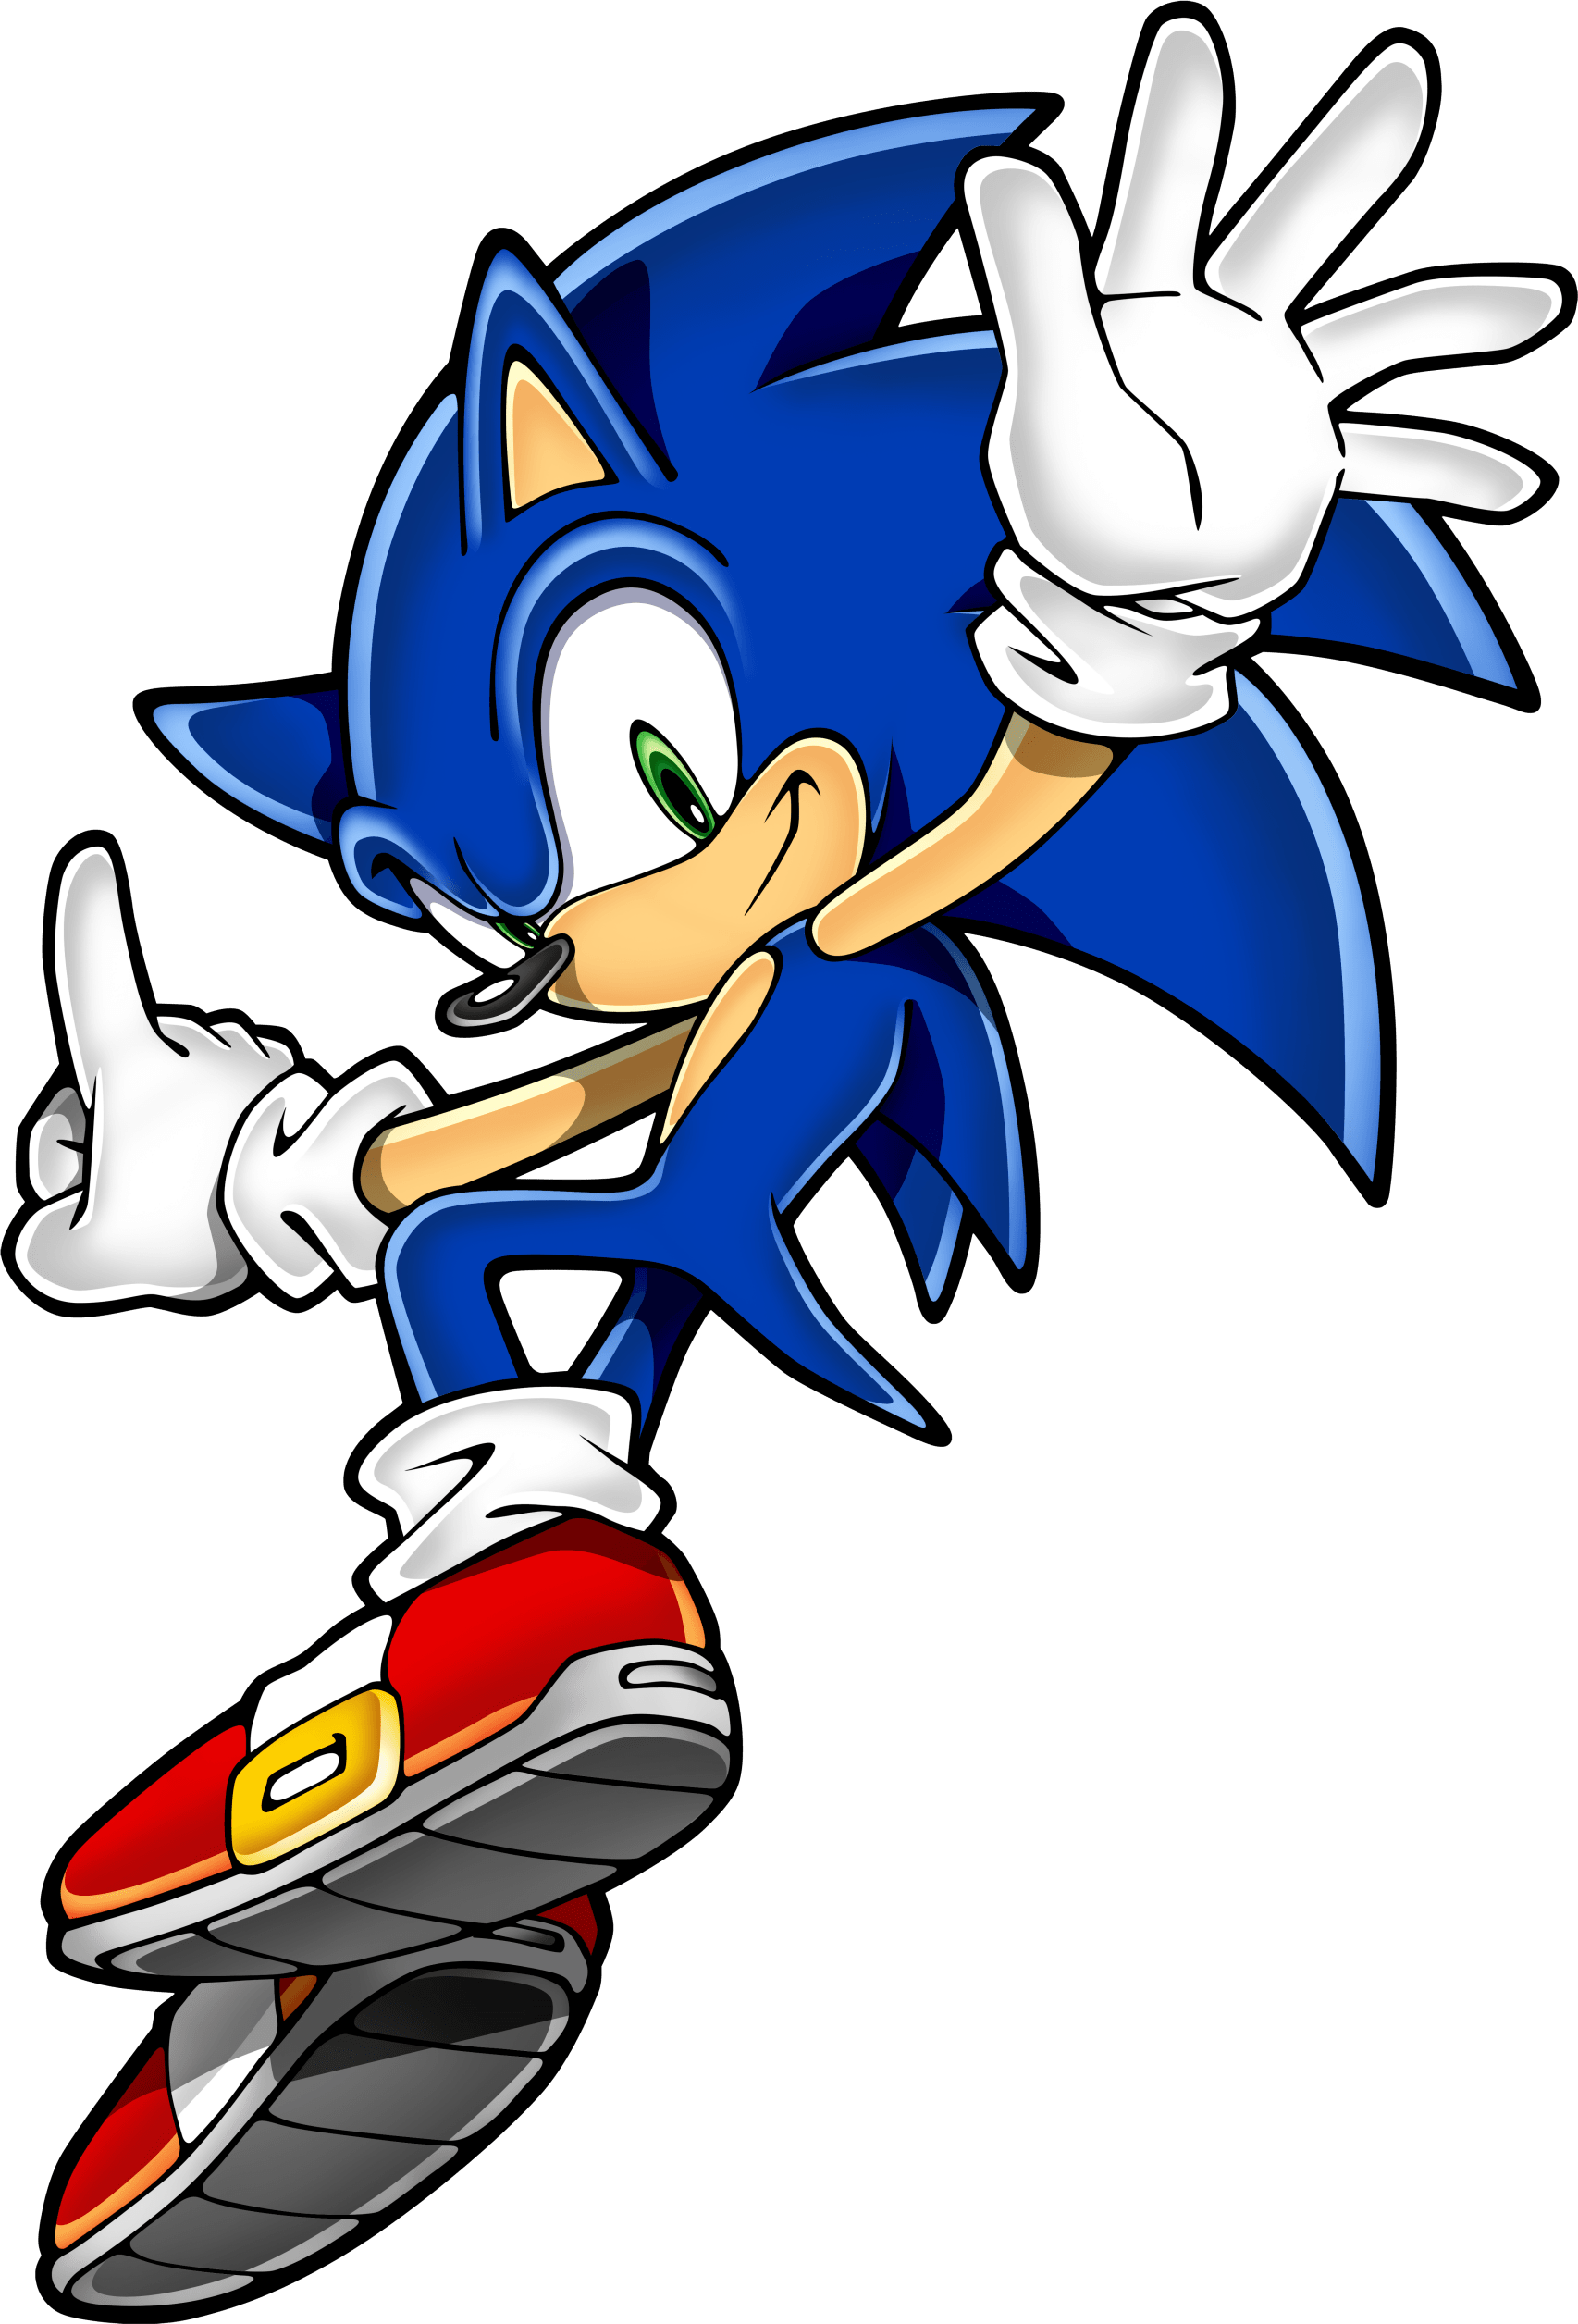 Sonic Smash Bros PNG imagen transparente